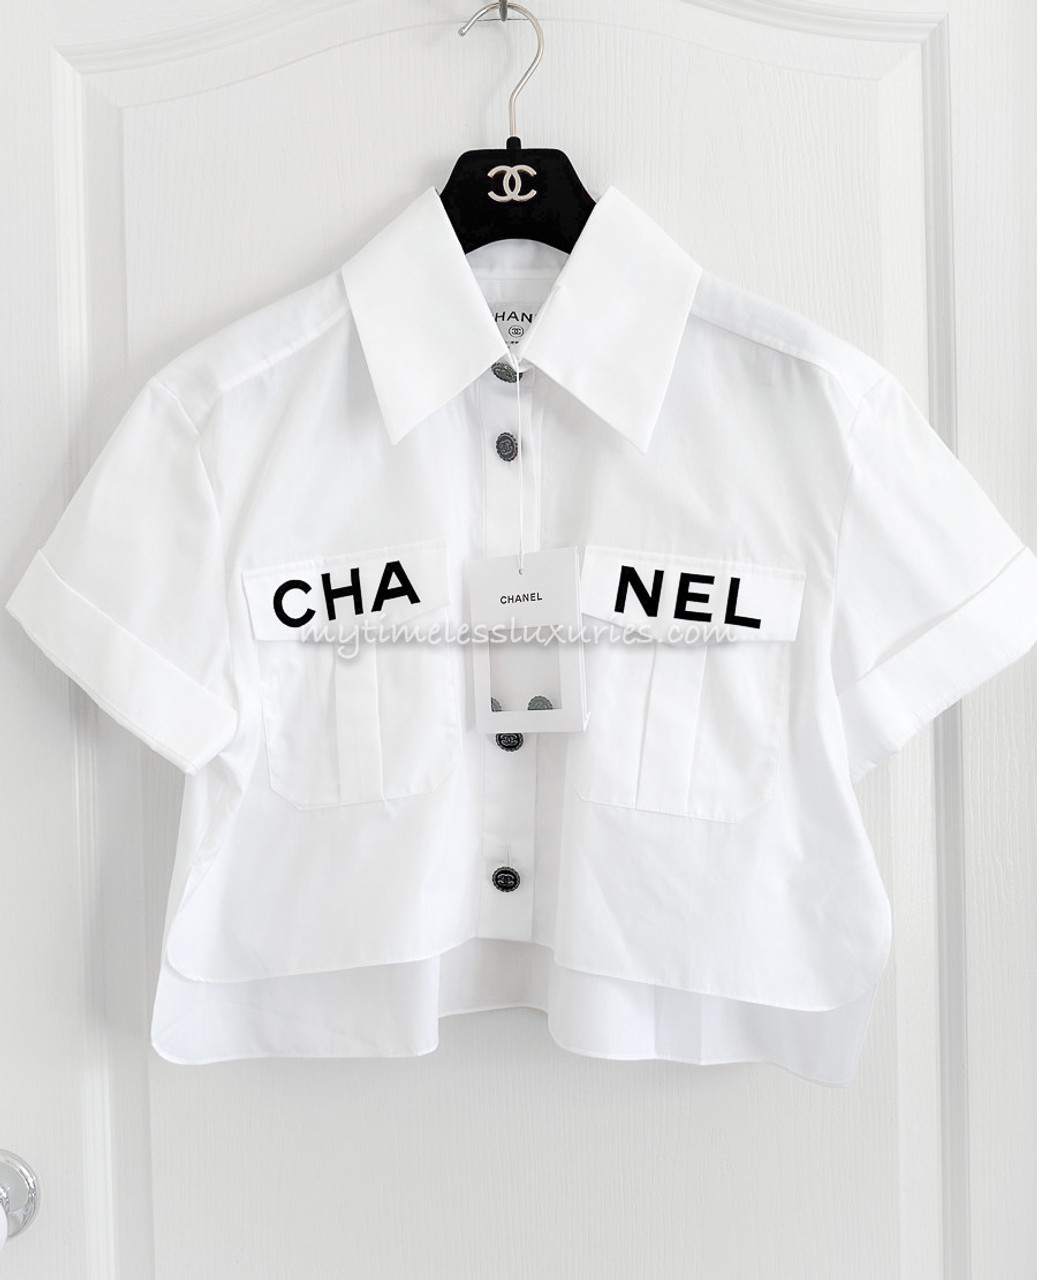 CHANEL Blue White Cotton Striped Open Collar Shirt  AMORE Vintage Tokyo